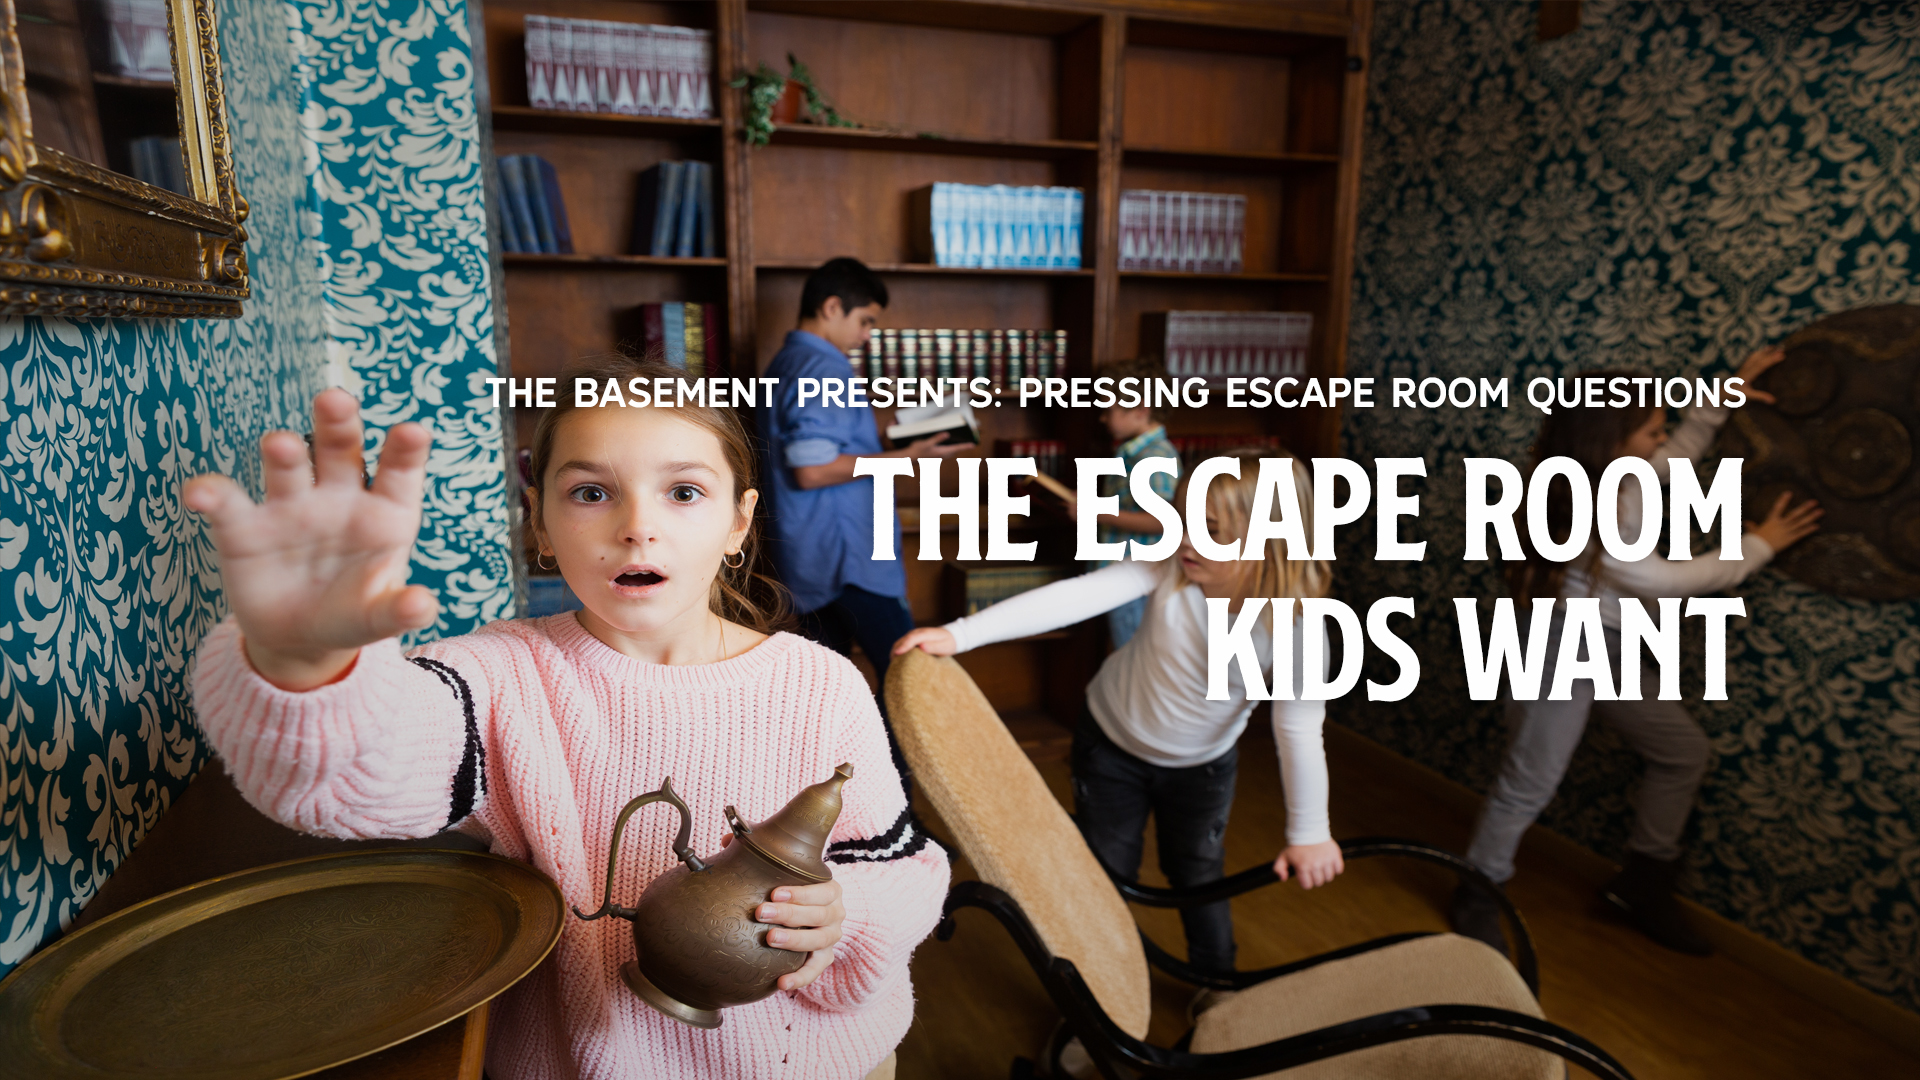 Escape Room Kids Want